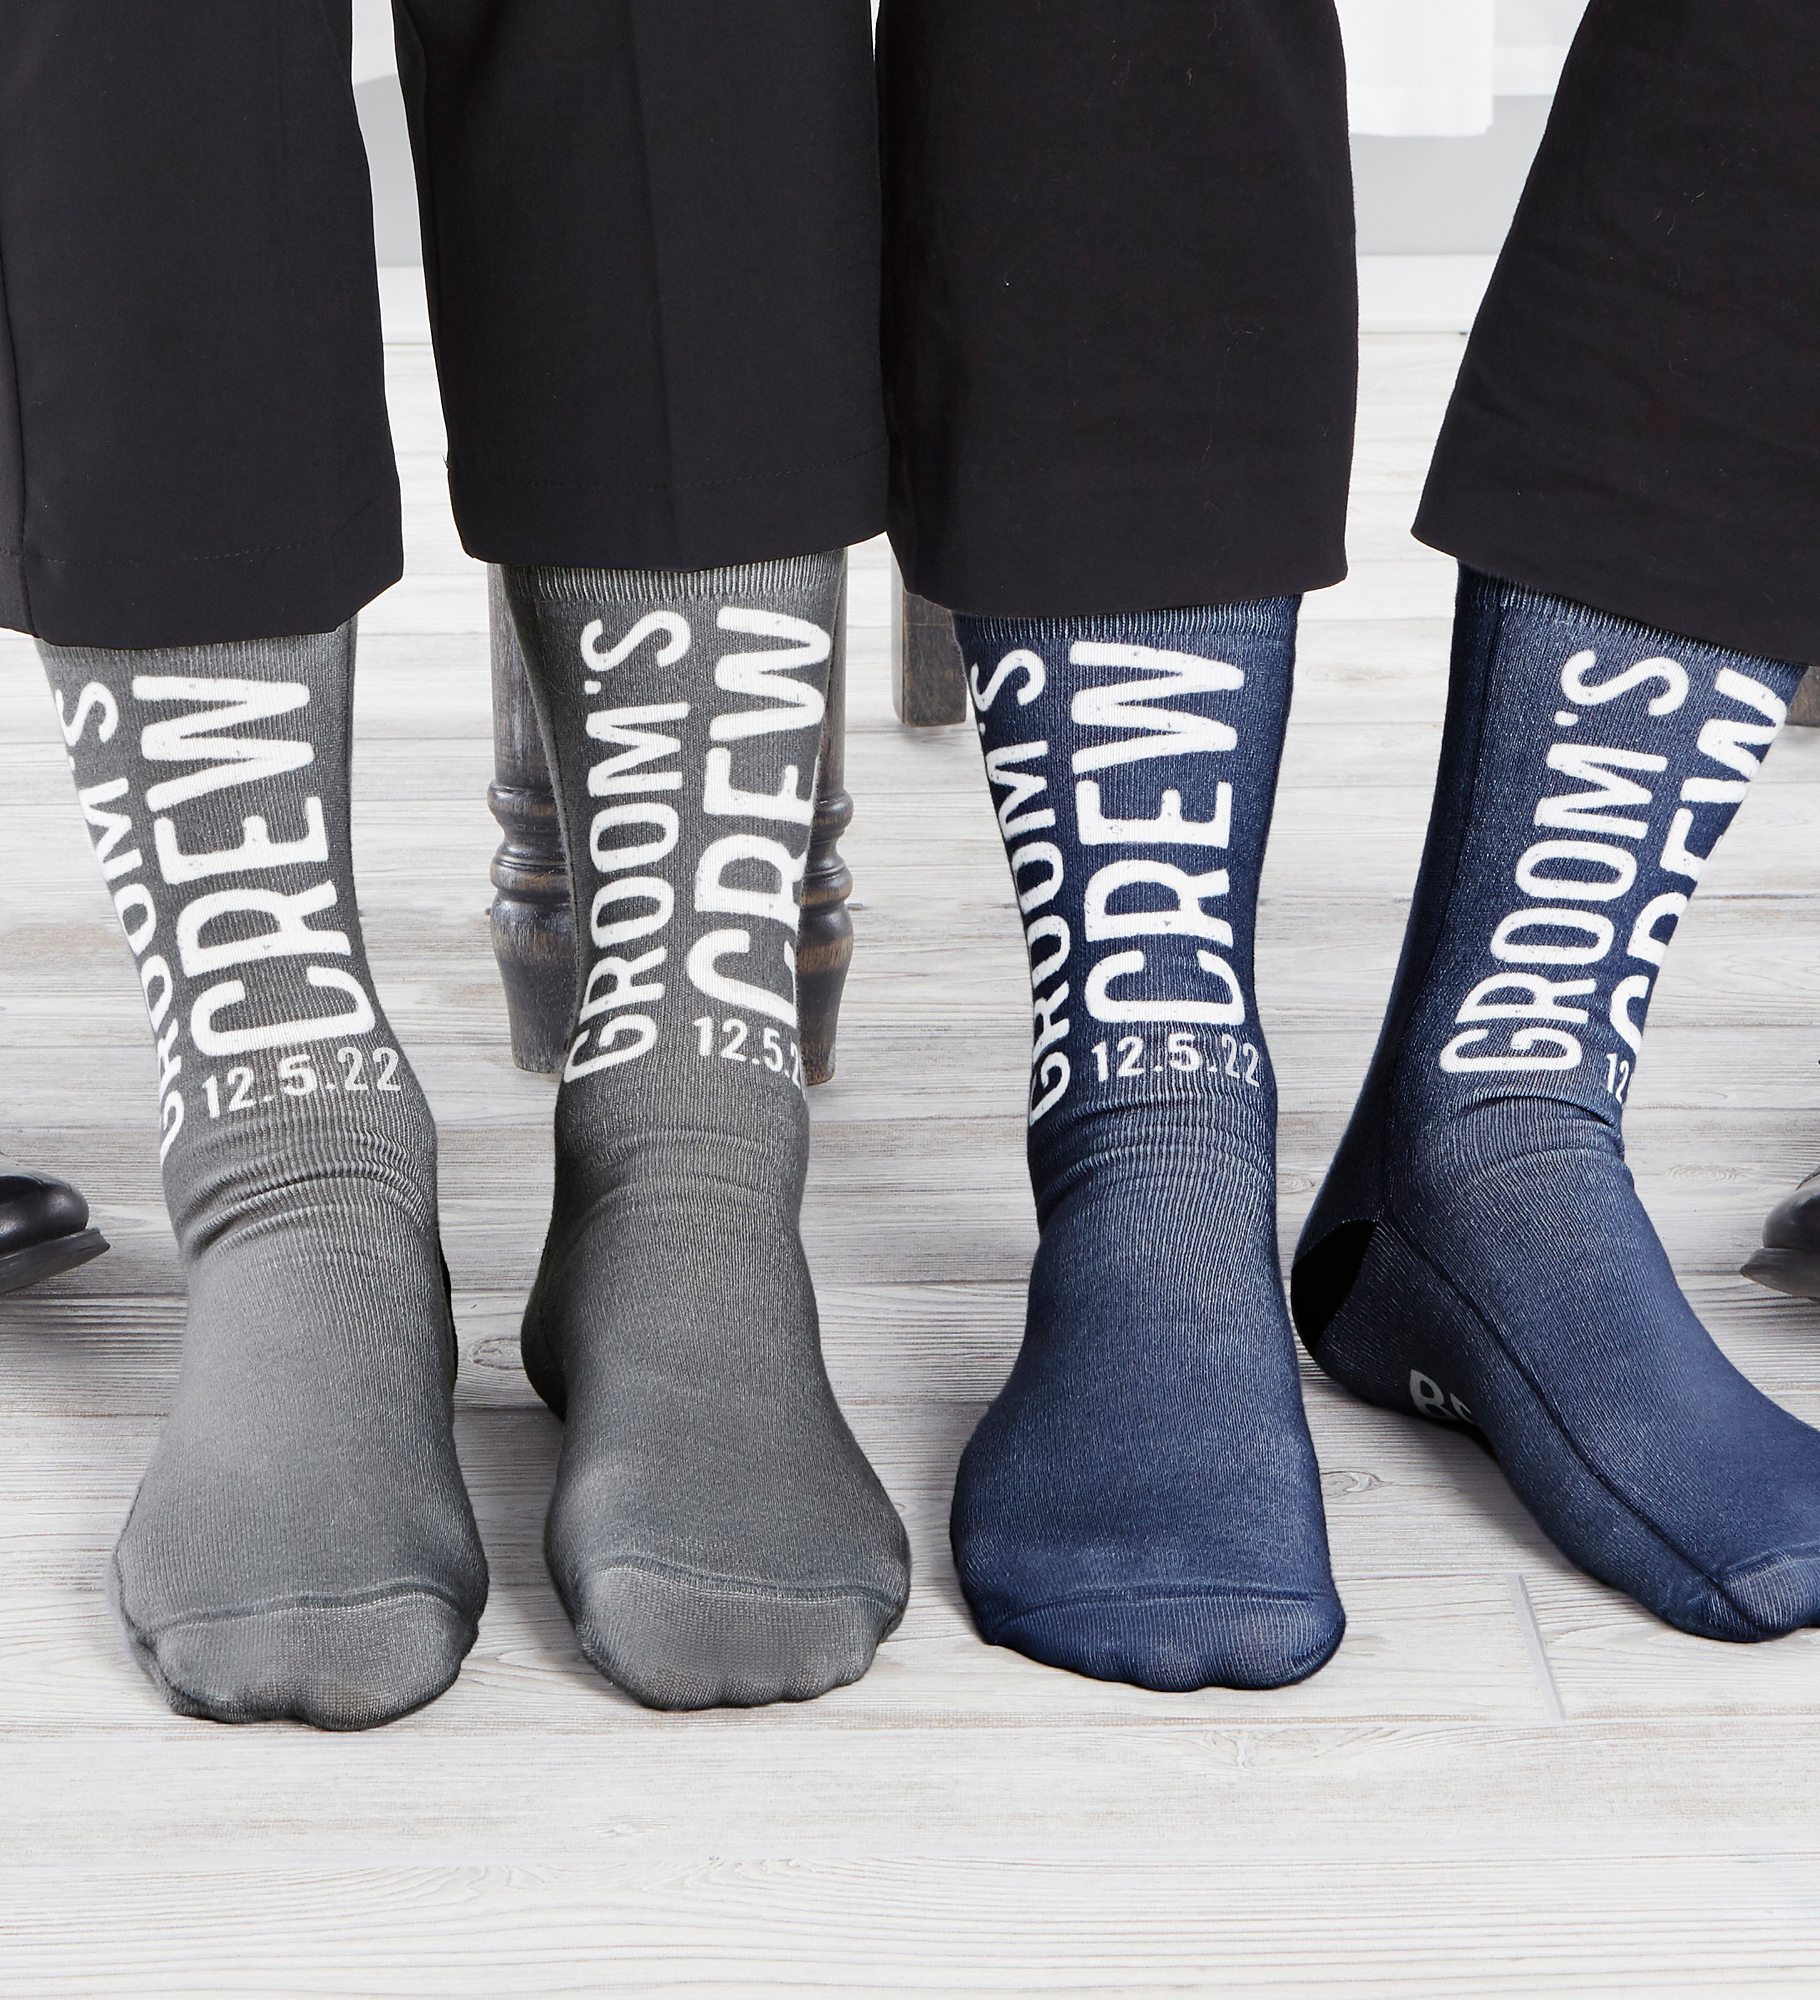 Groom's Crew Personalized Wedding Adult Socks